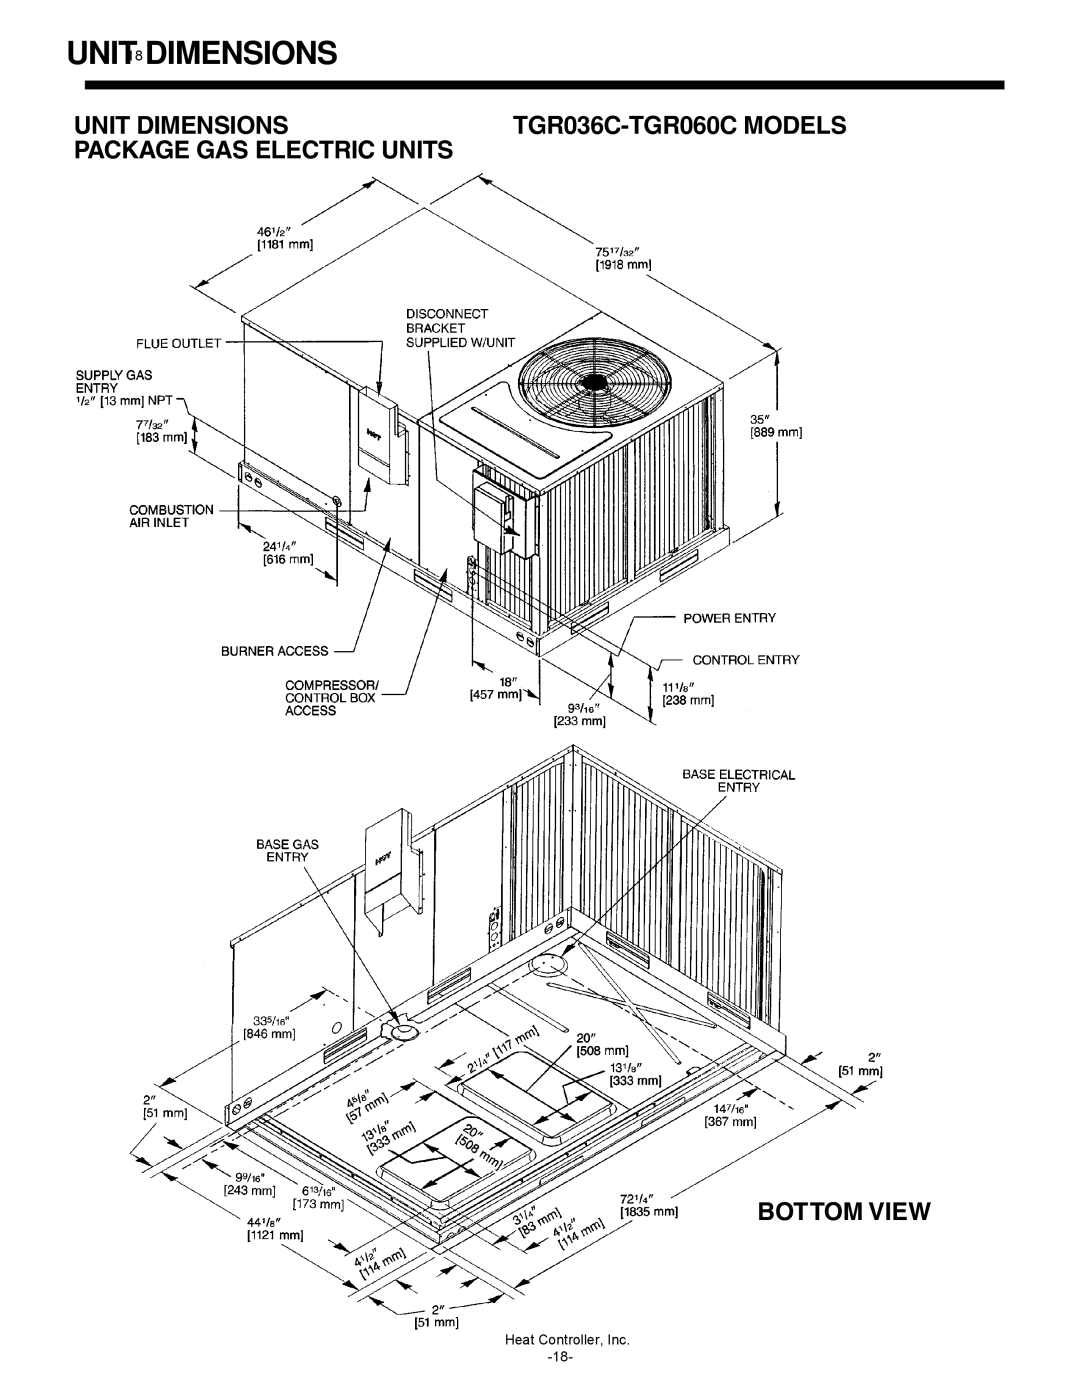 Heat Controller TGC060C-4K-135 manual Unit Dimensions, Package Gas Electric Units, Bottom View, TGR036C-TGR060CMODELS 